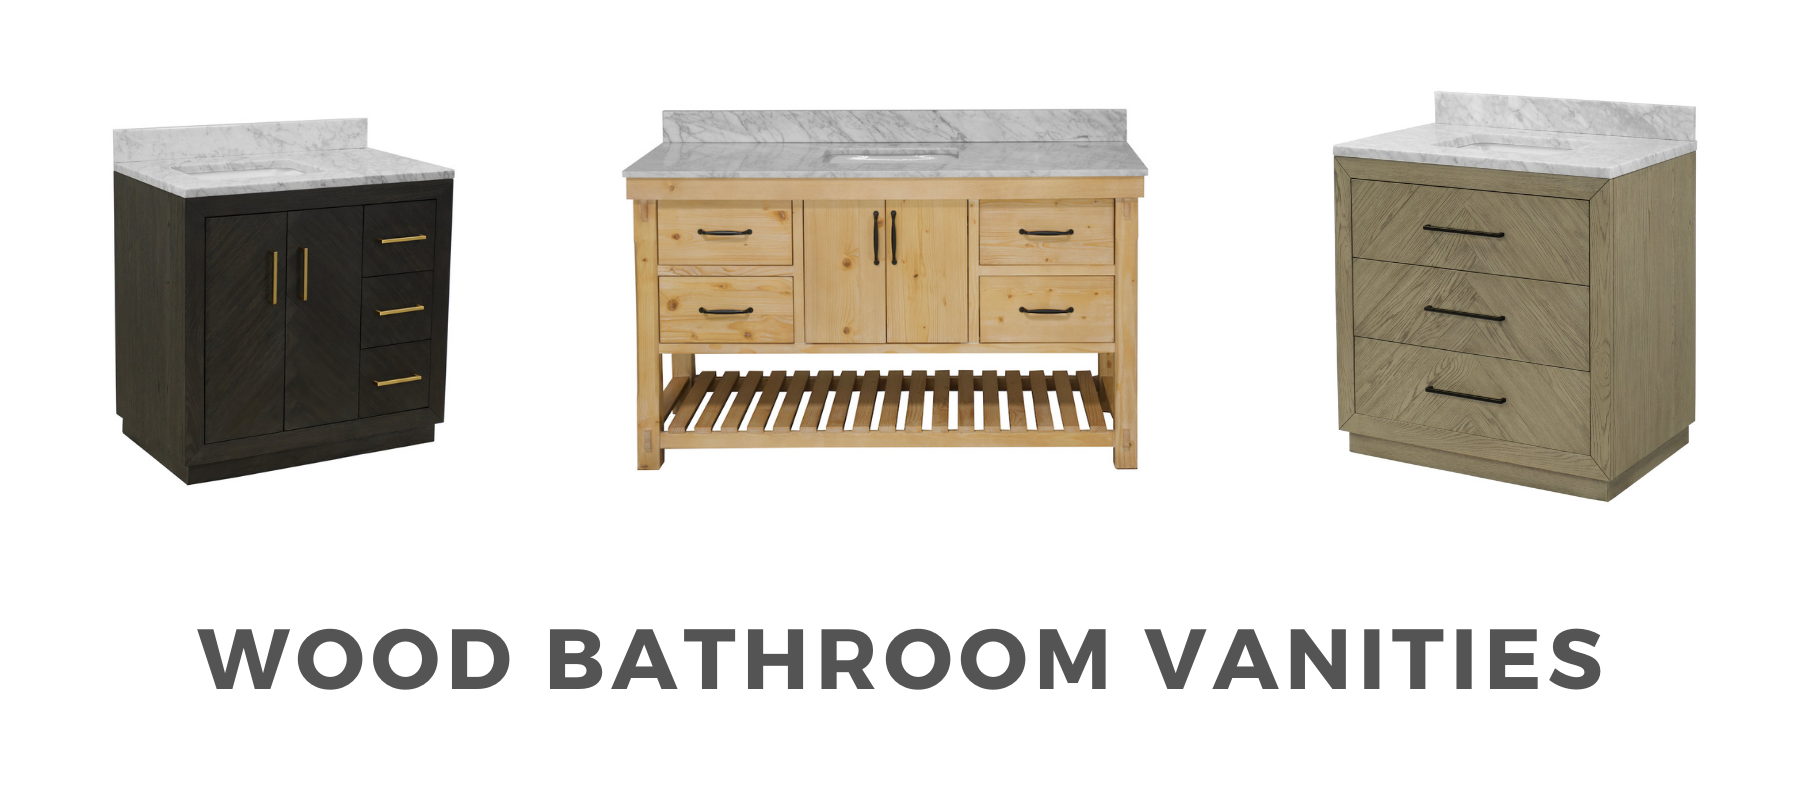 Most Popular Bathroom Vanity Color Wood